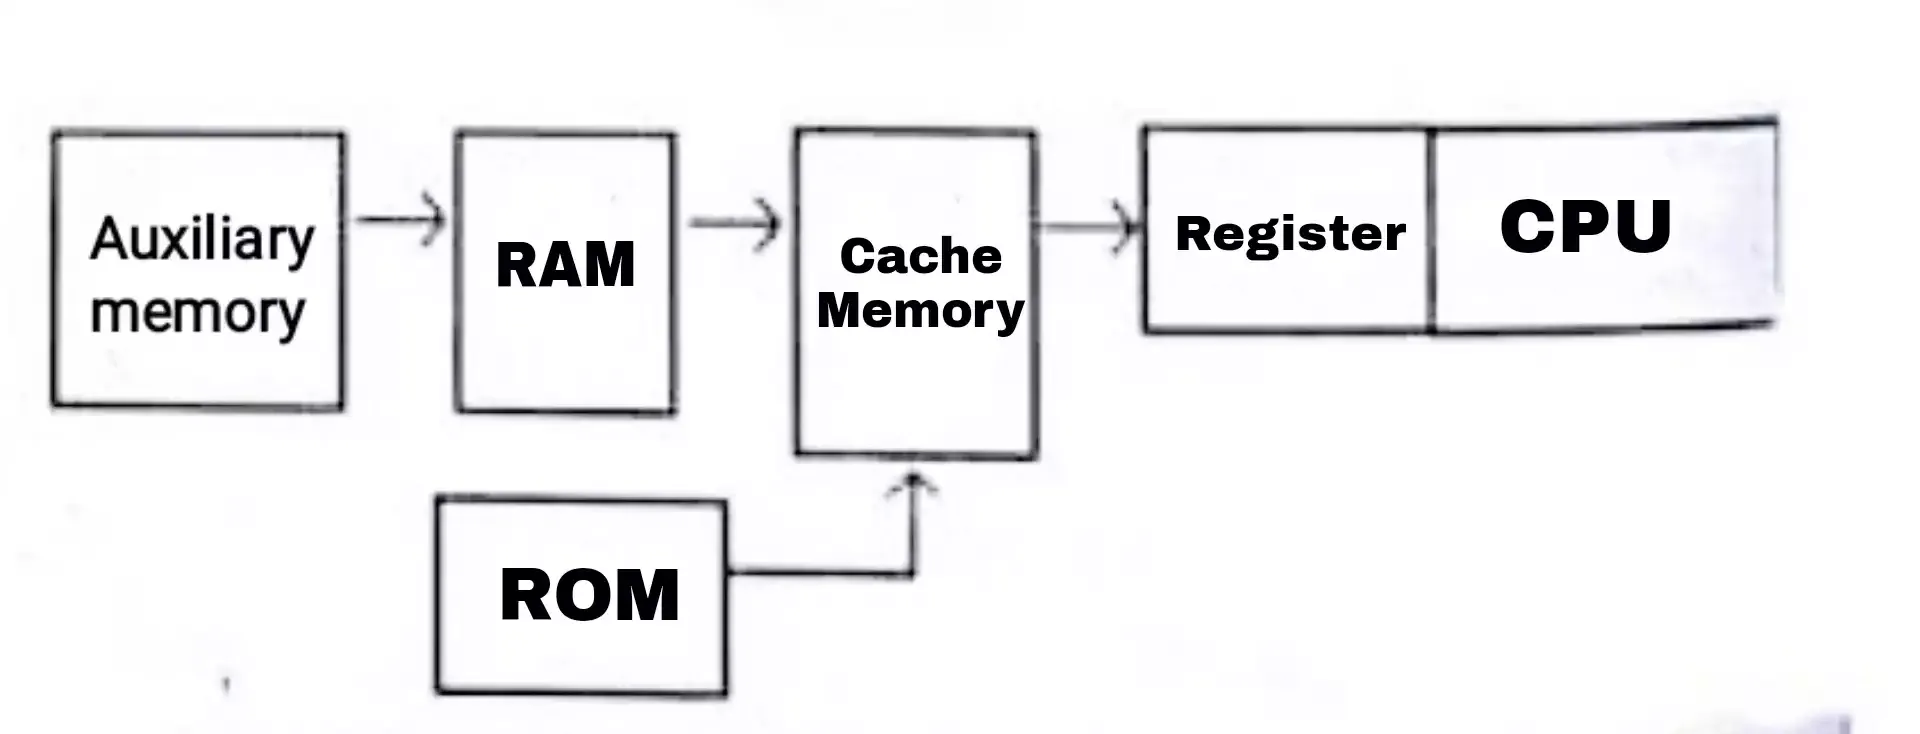 What is RAM - RandomAccess Memory